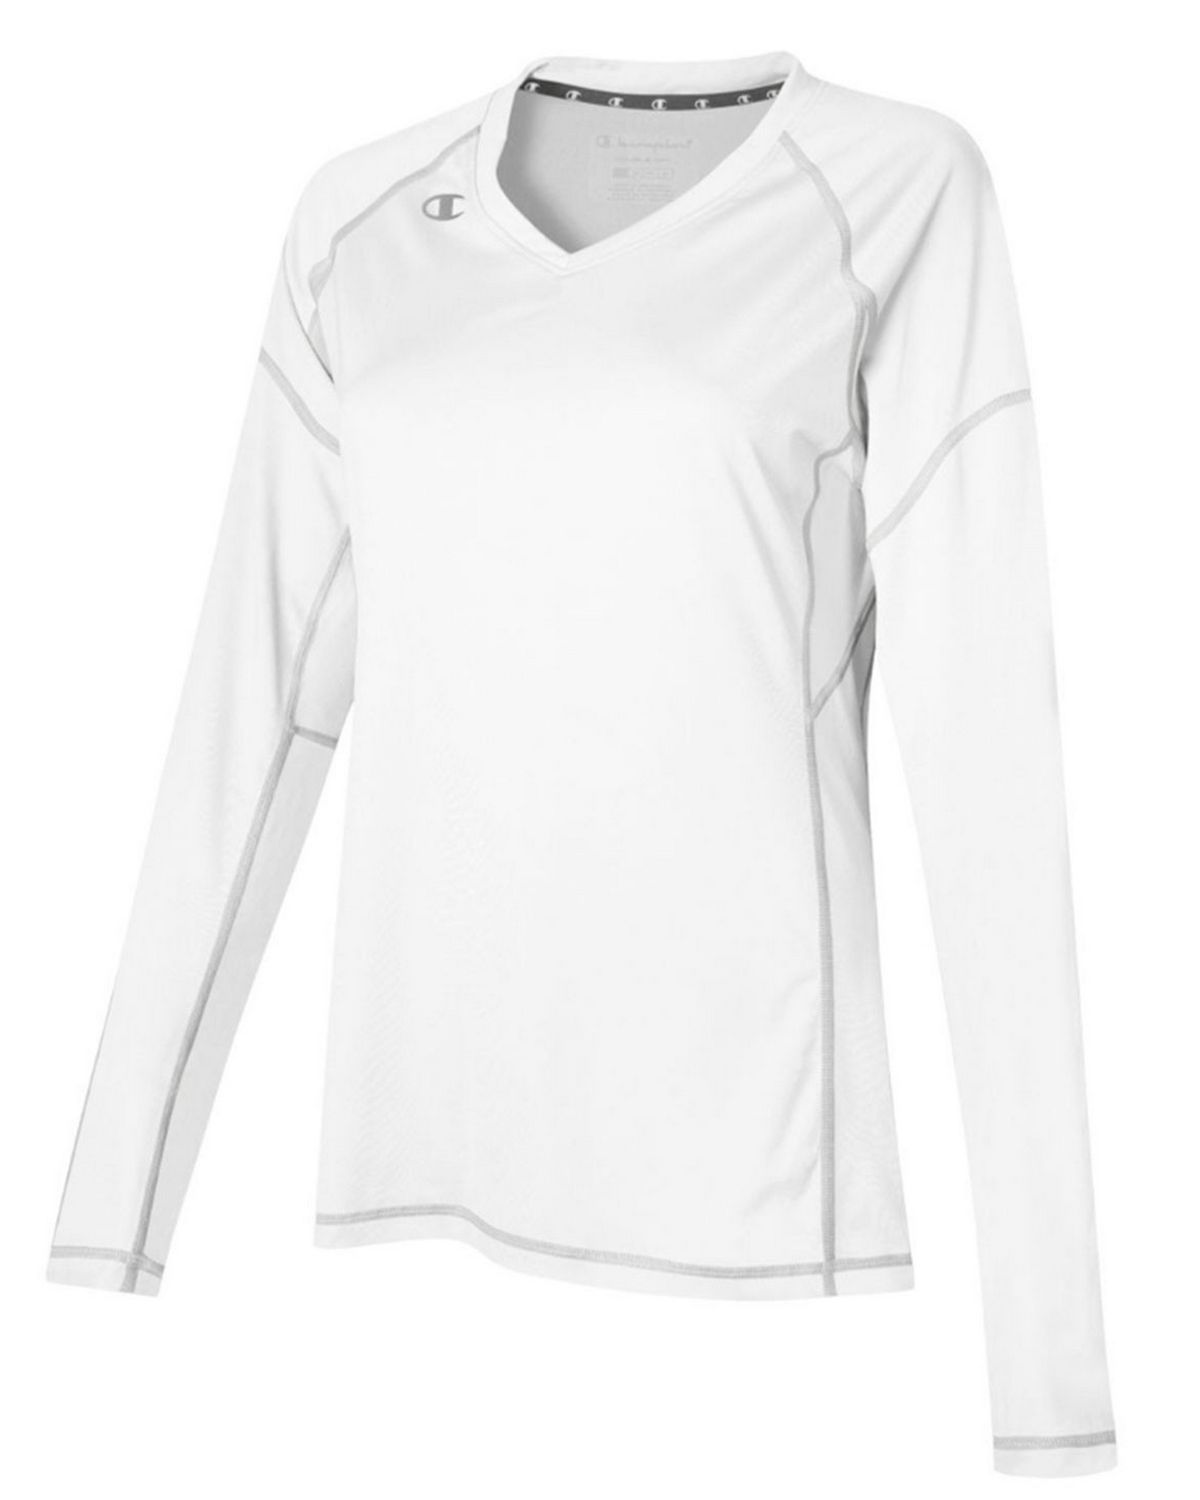 white long sleeve champion shirt womens